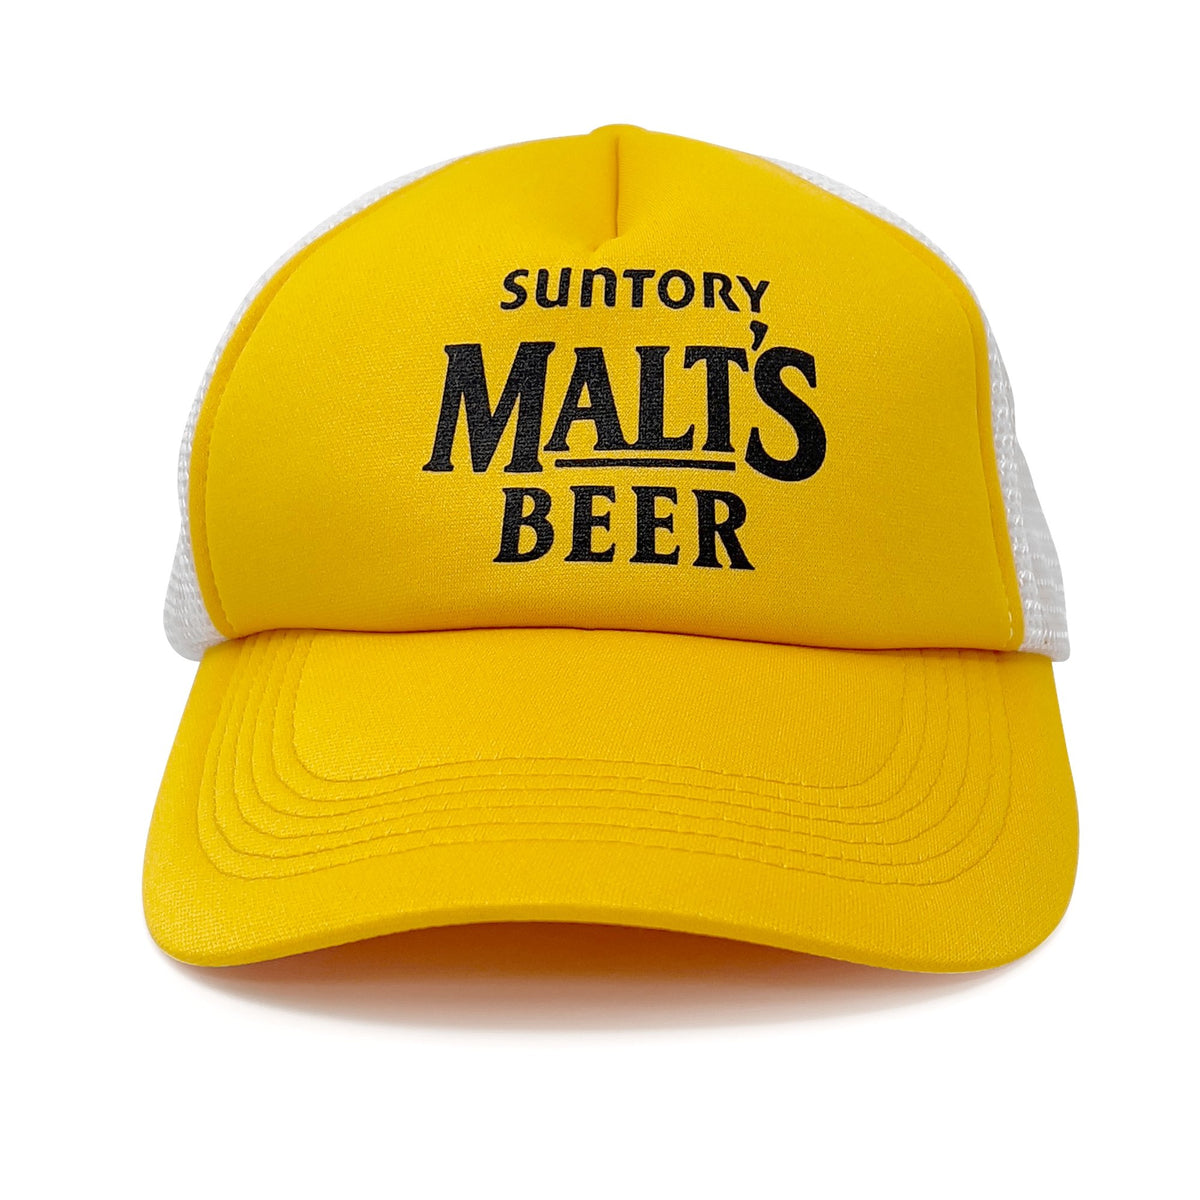 New Retro Limited Edition Japan Suntory Malt's Snapback Trucker Hat Cap Yellow - Sugoi JDM